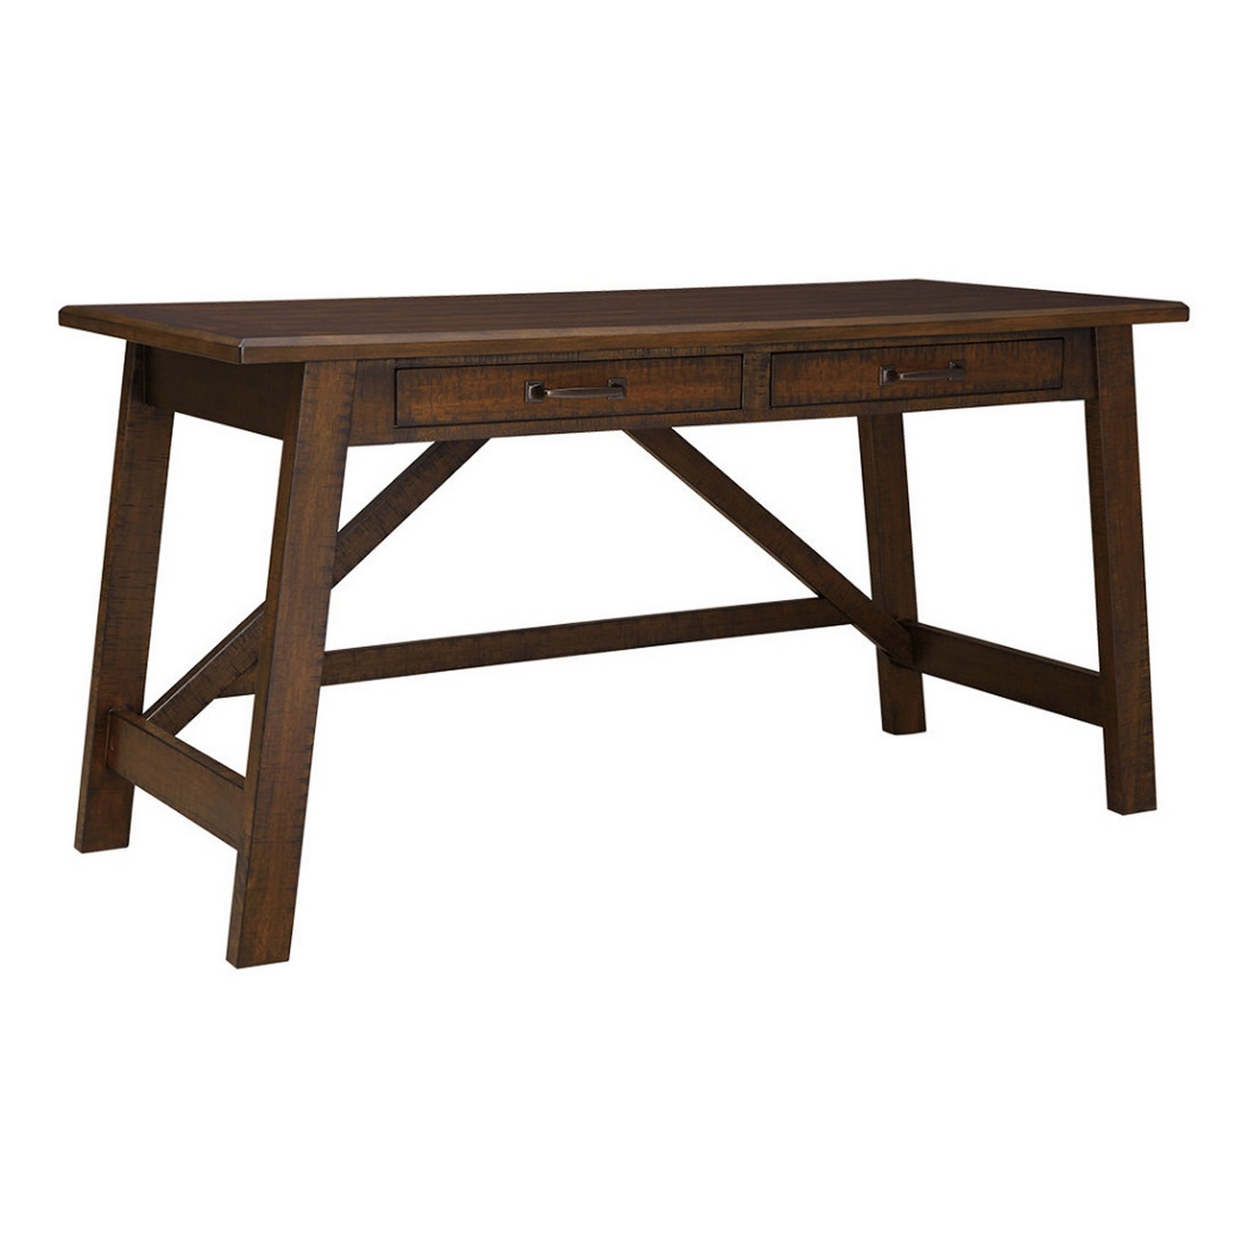 Two Drawers Wooden Desk With Cross Stretcher Brace Design, Large, Brown- Saltoro Sherpi